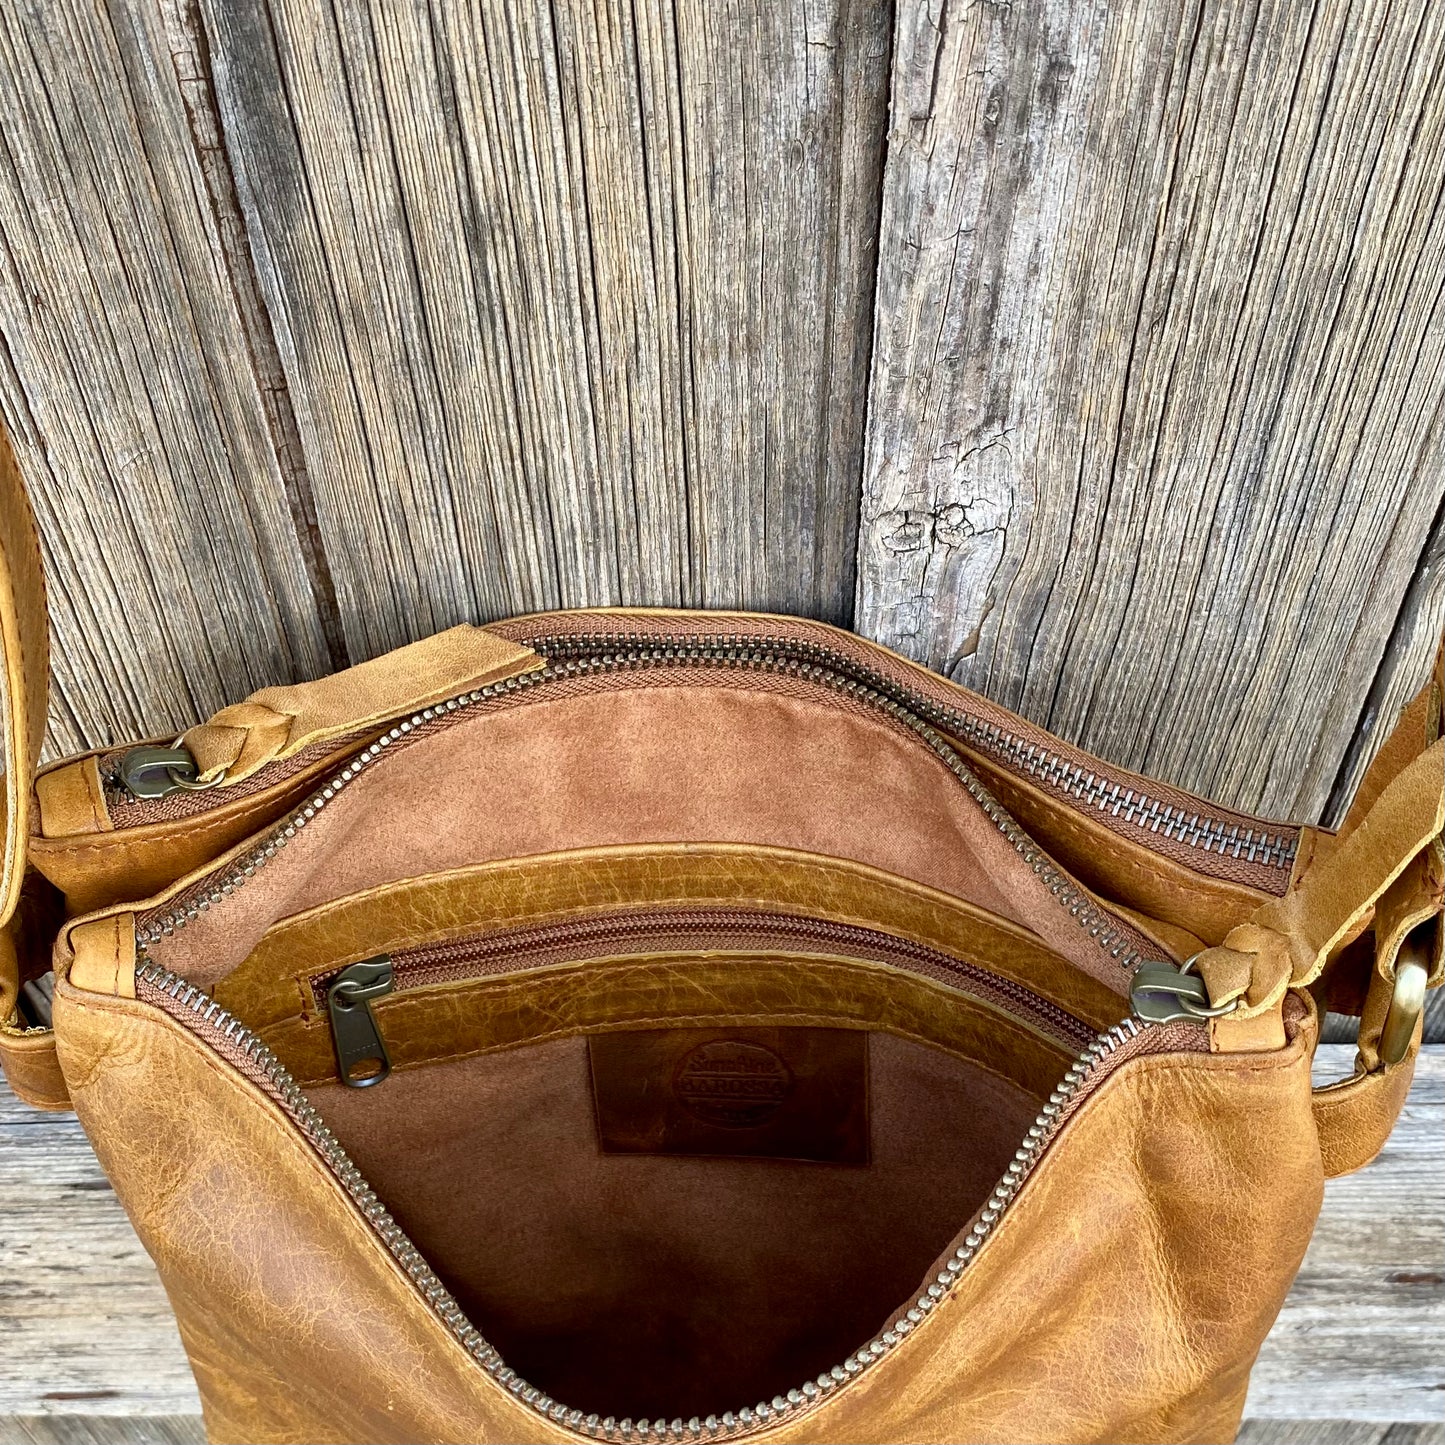 Sally Double Compartment Leather Handbag/Travel Bag